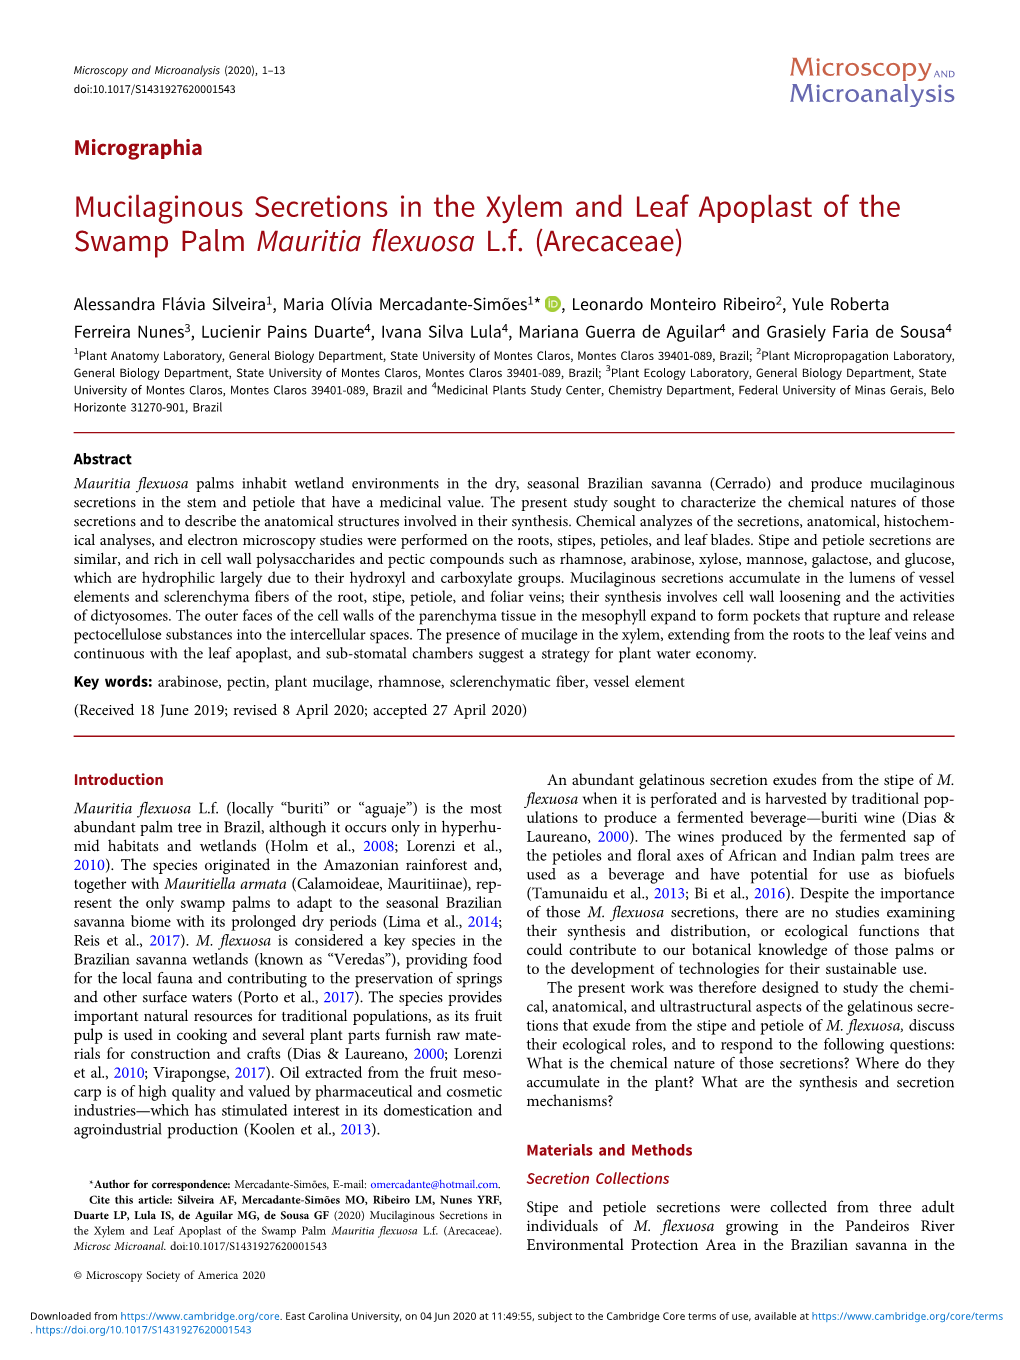 Mucilaginous Secretions in the Xylem and Leaf Apoplast of the Swamp Palm Mauritia Flexuosa L.F